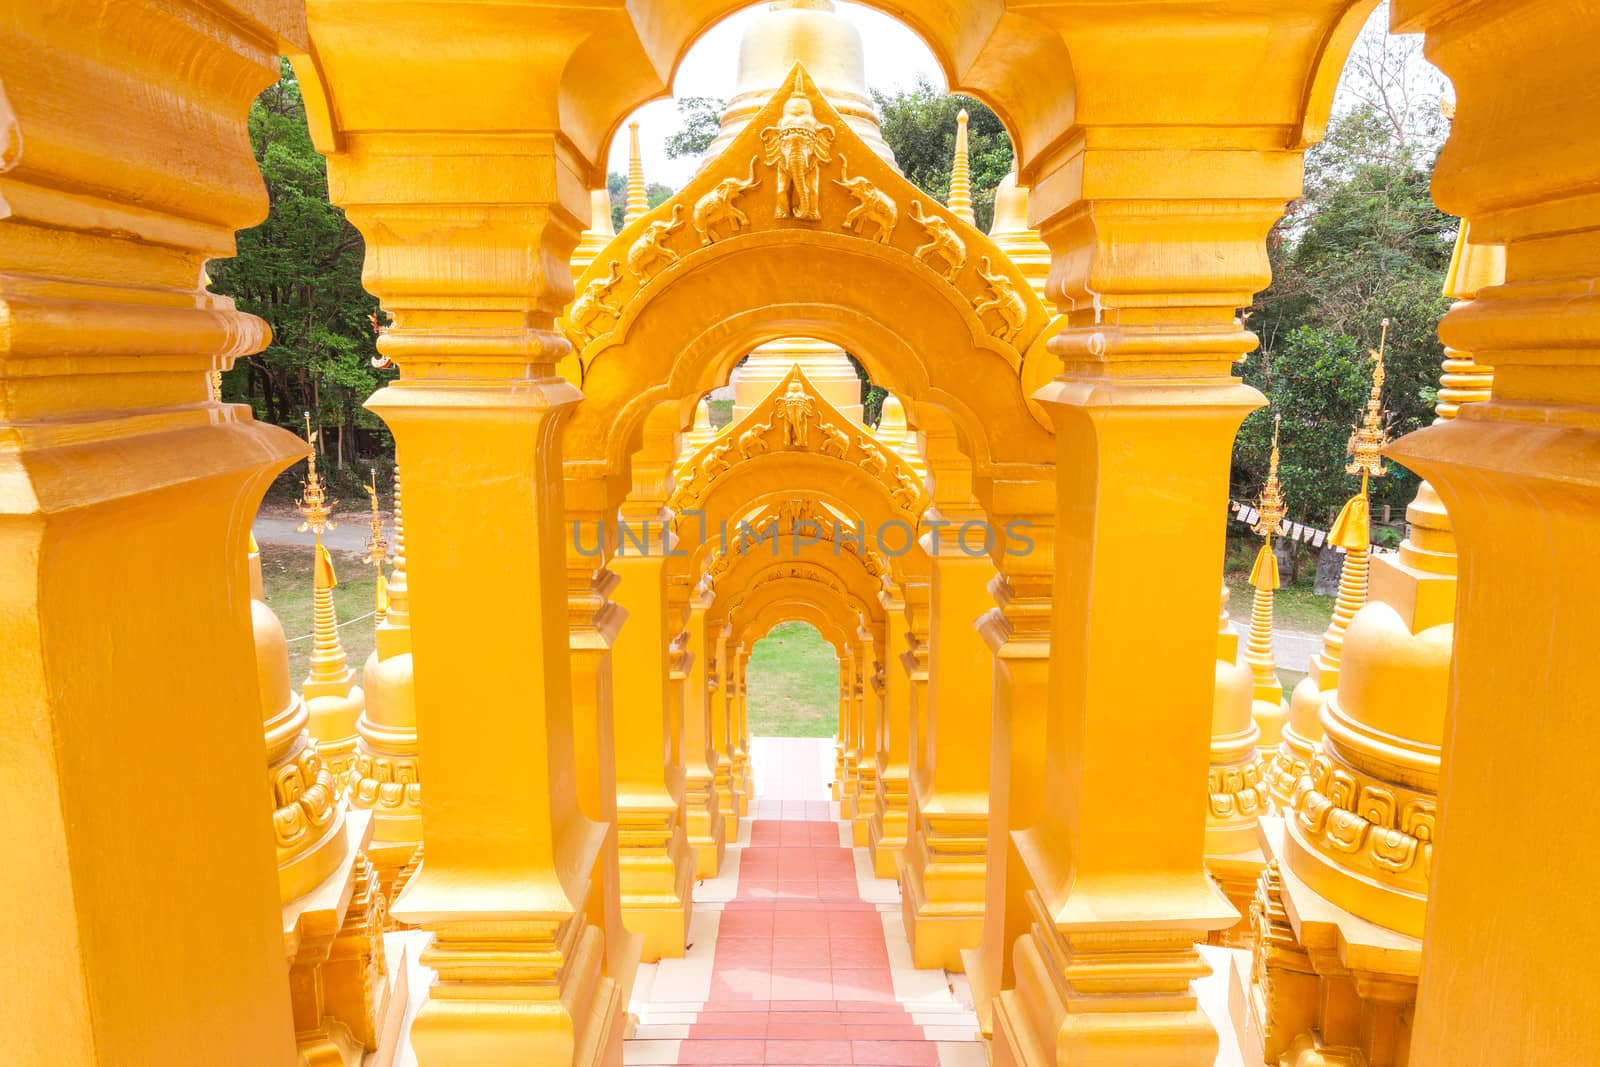 Pagoda in Wat-Sawangboon at Saraburi, Thailand